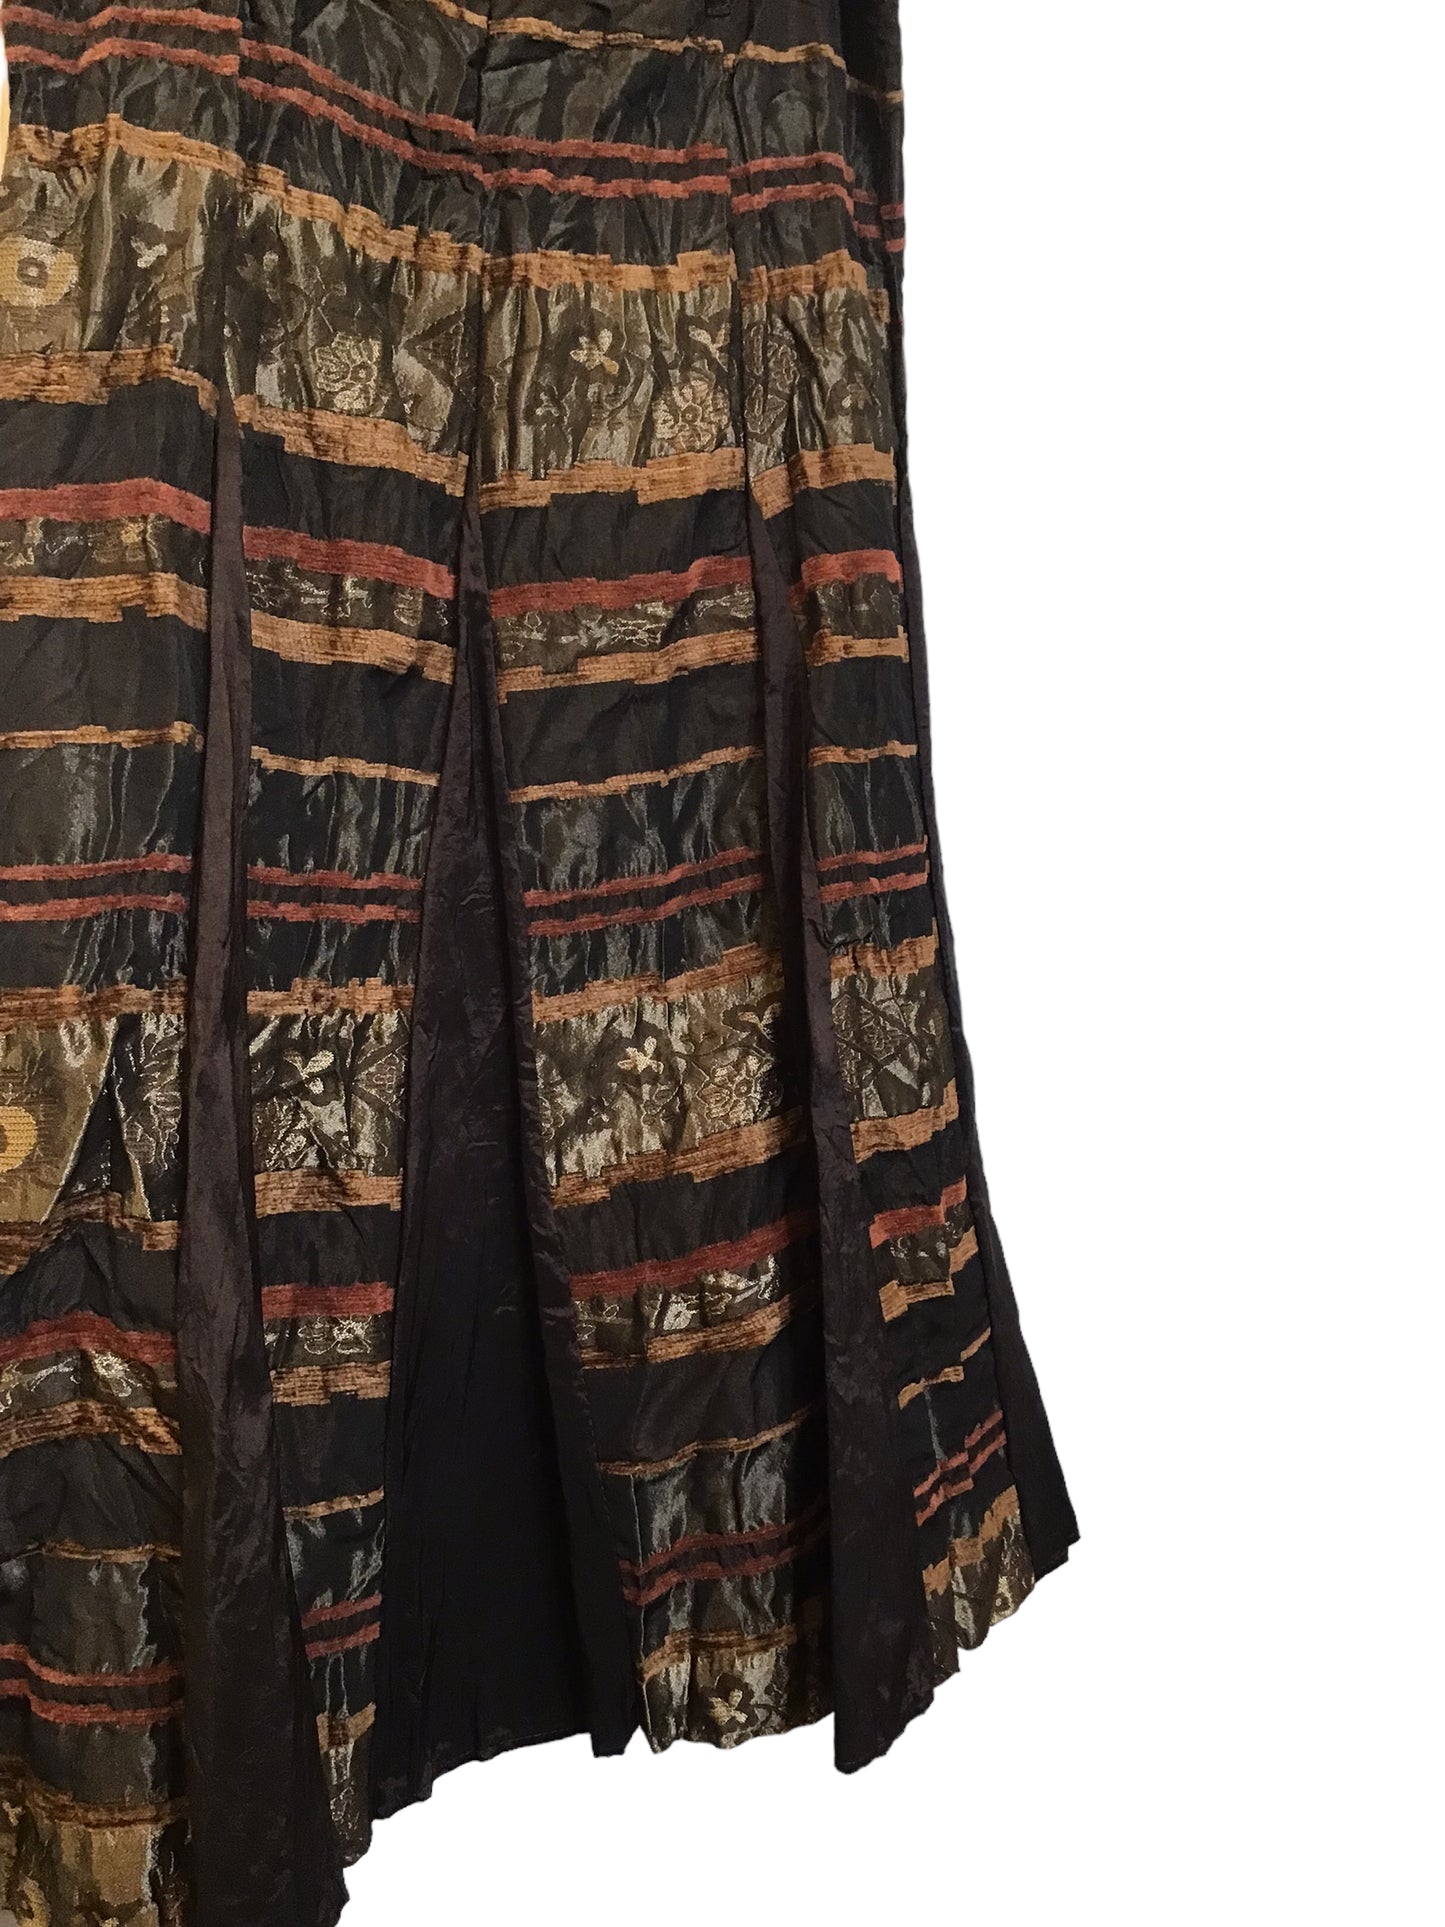 Patterned Skirt (Size L)